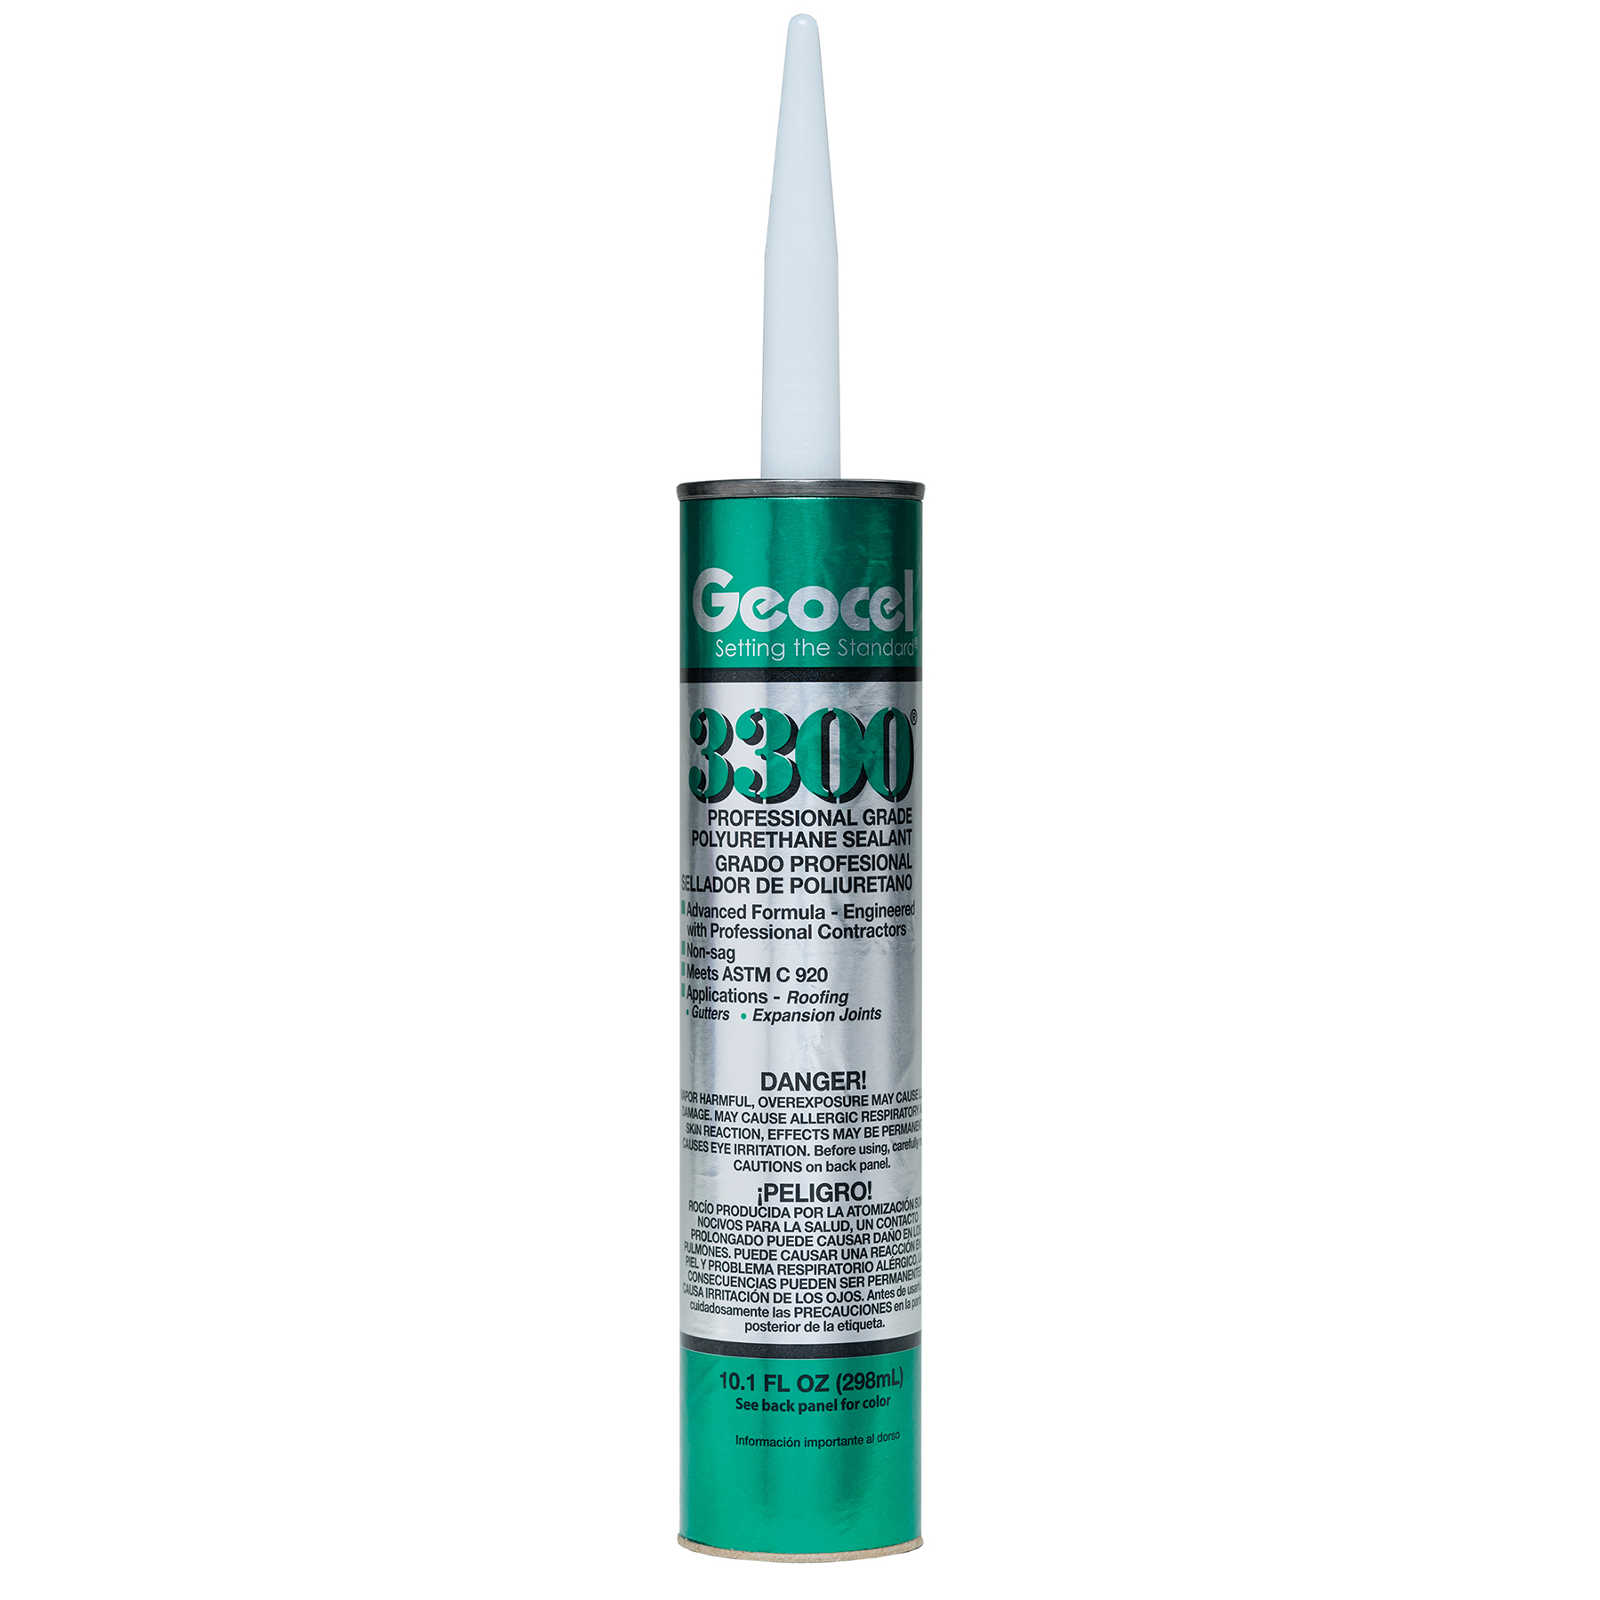 Geocel 3300 Professional Grade Polyurethane Sealant